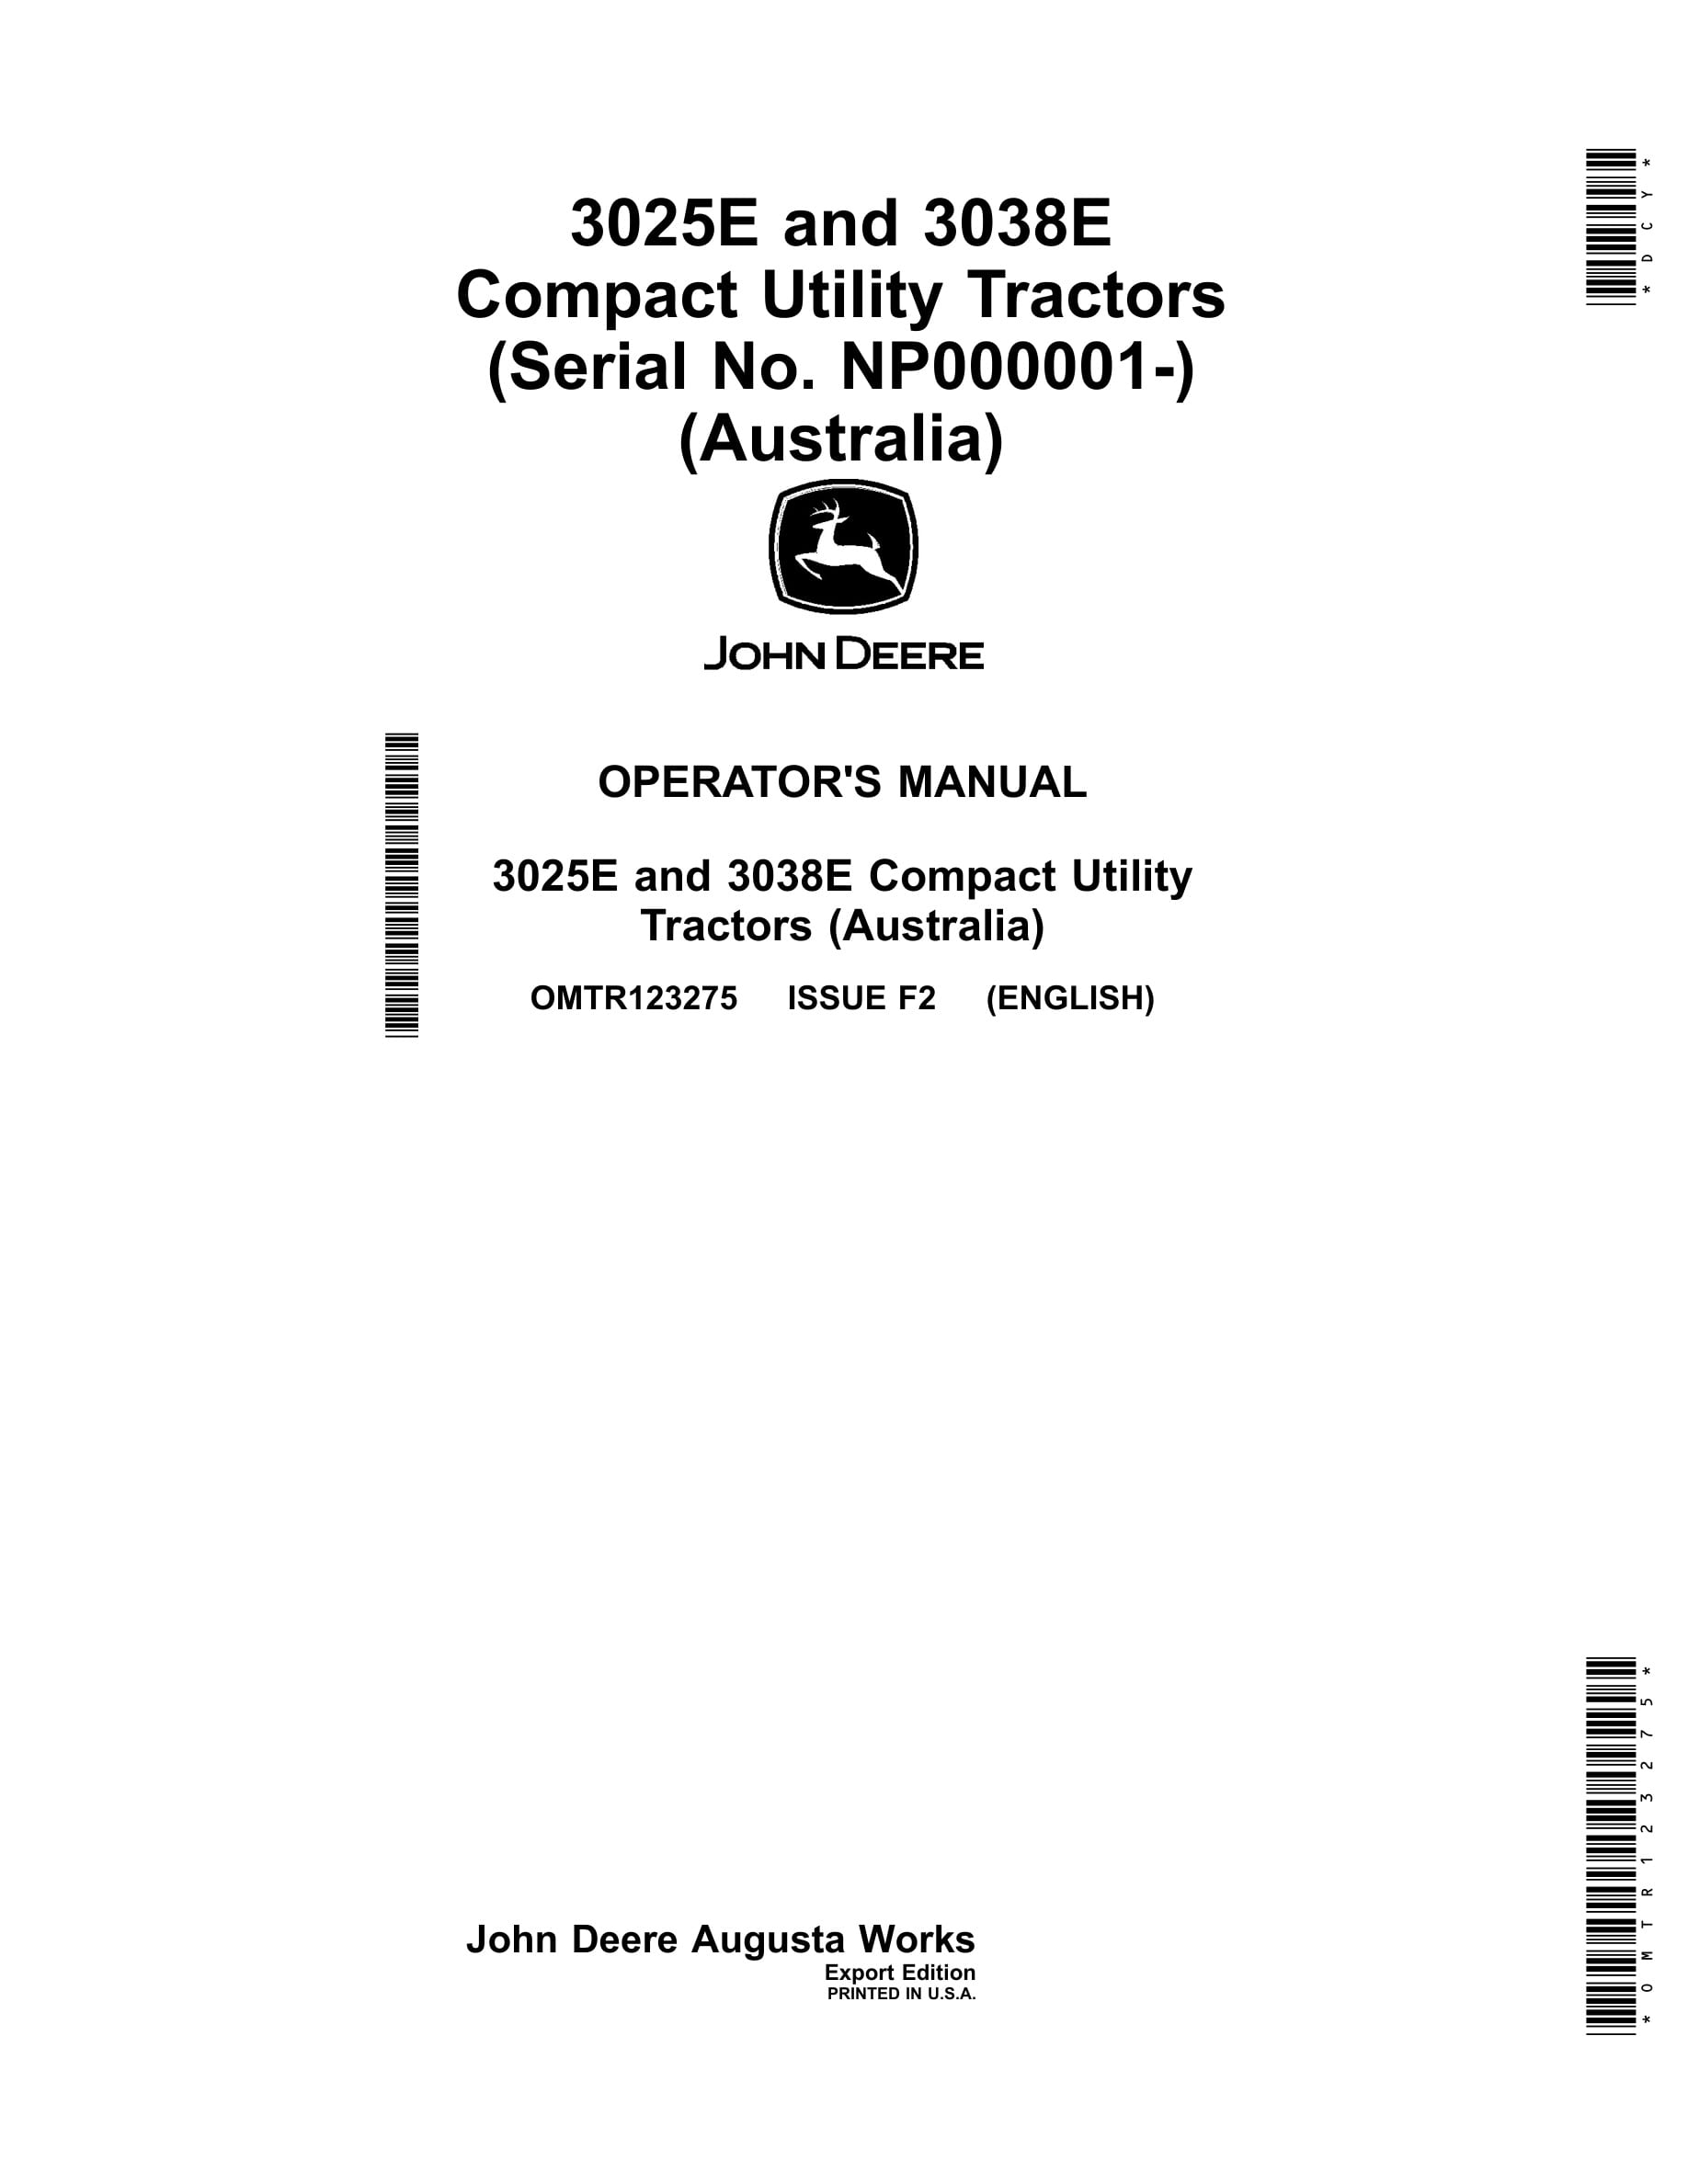 John Deere 3025e And 3038e Compact Utility Tractors Operator Manuals OMTR123275-1